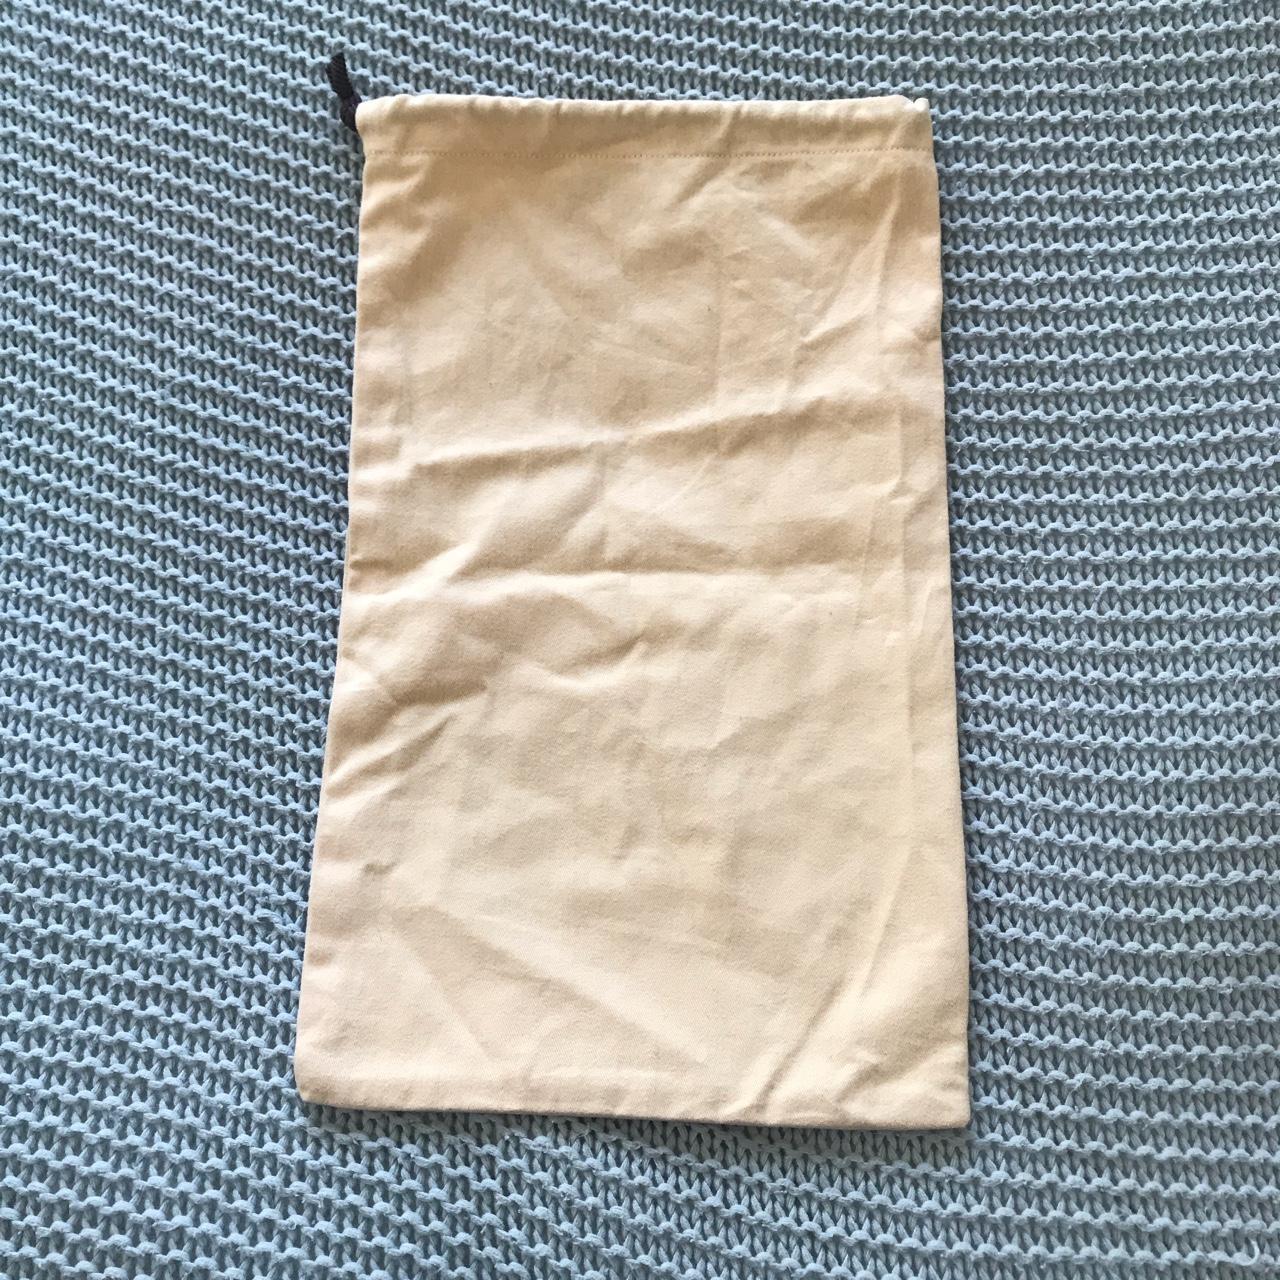 louis vuitton dust bag , 9.25 x 15.75 inches, no flaws